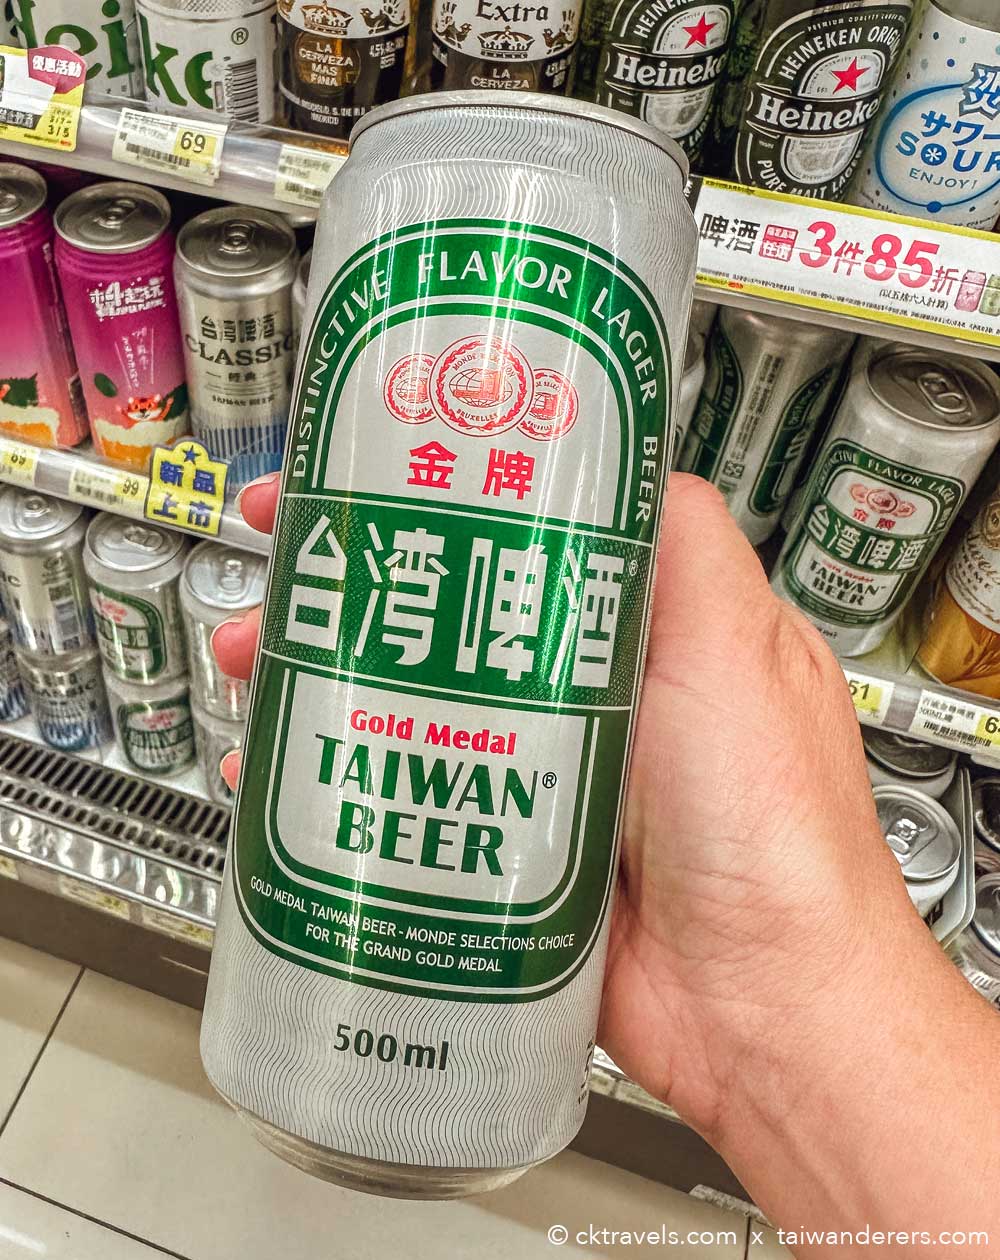 Taiwan 7-Eleven Taiwan beer